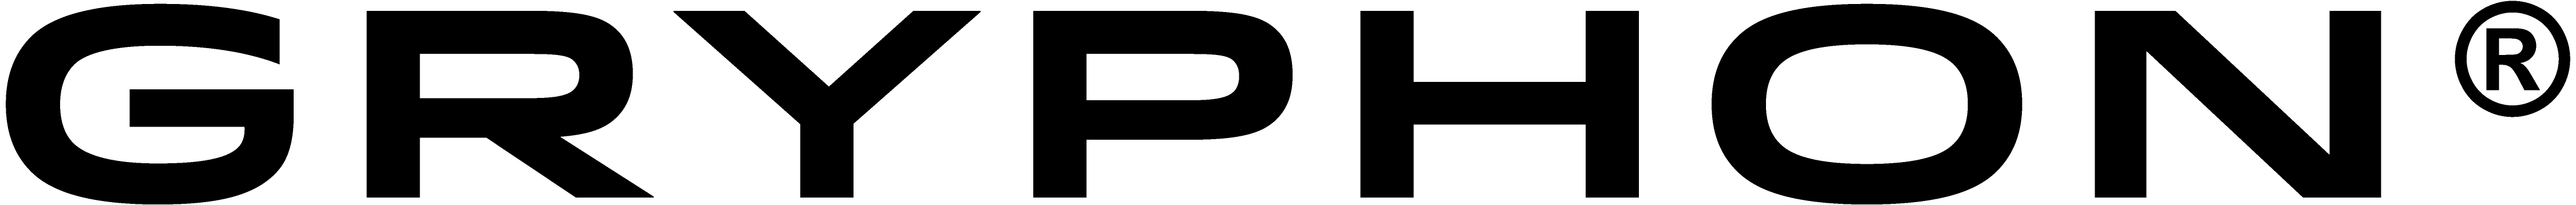 Gryphon Logo